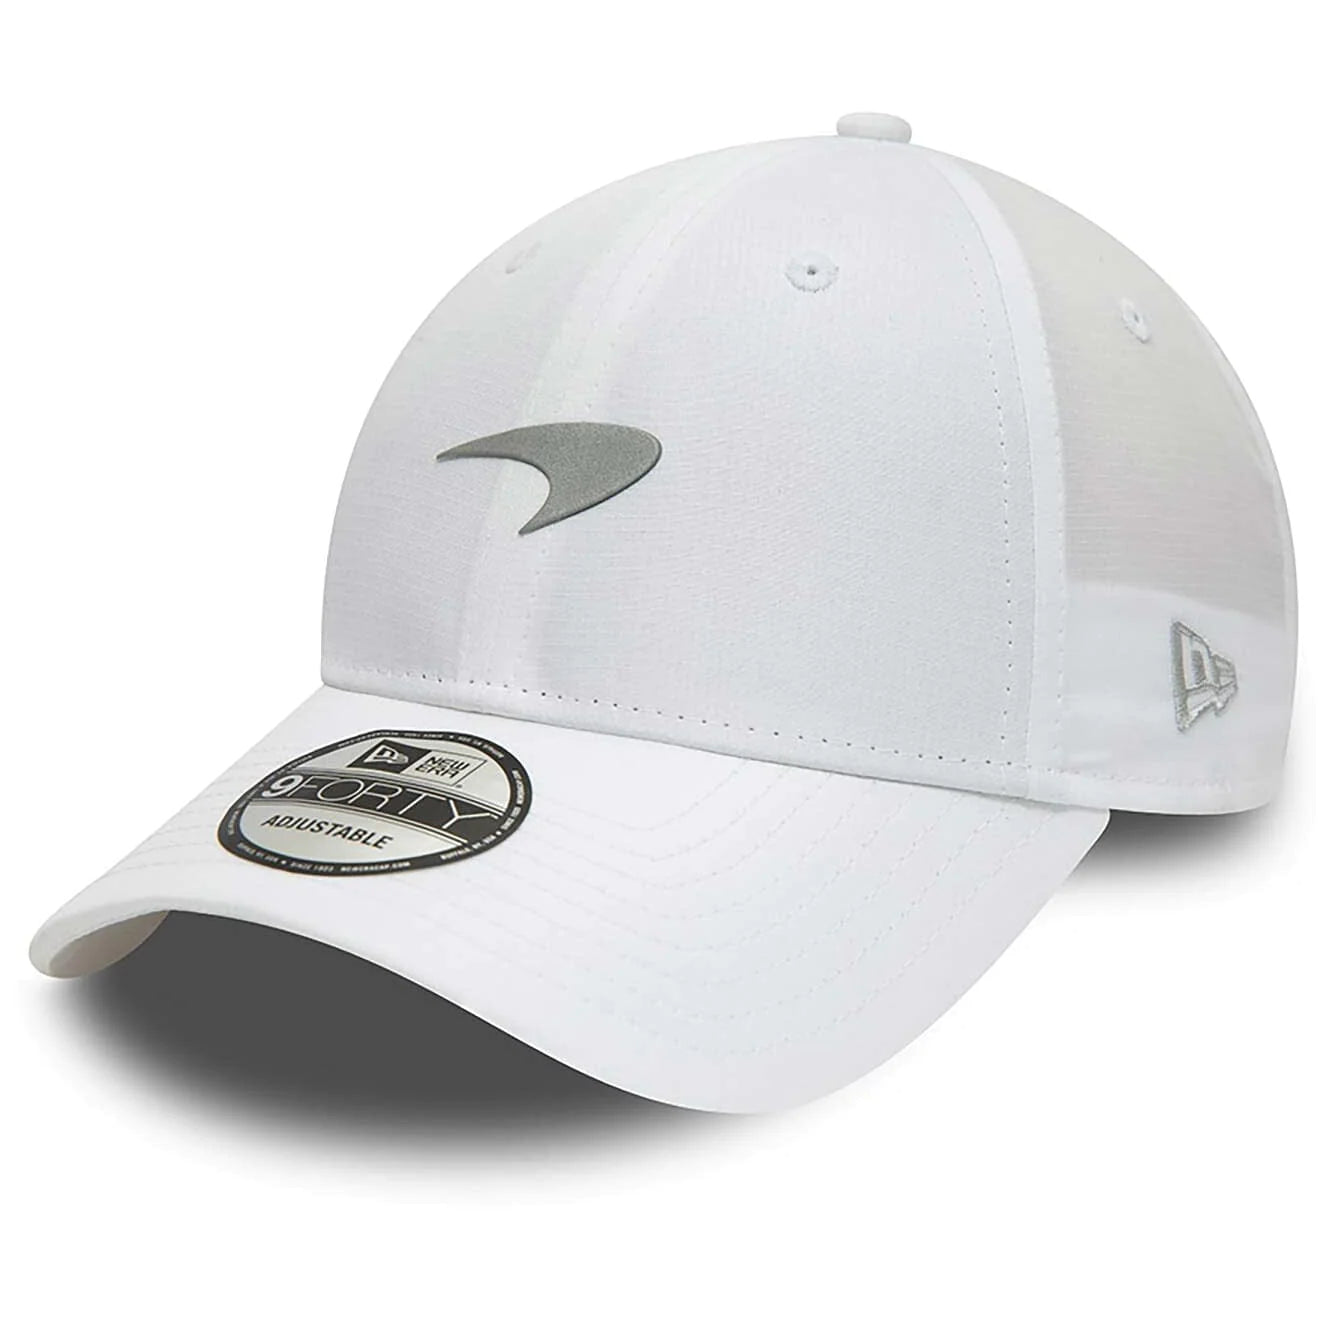 McLaren Racing Lifestyle Adjustable Hat White